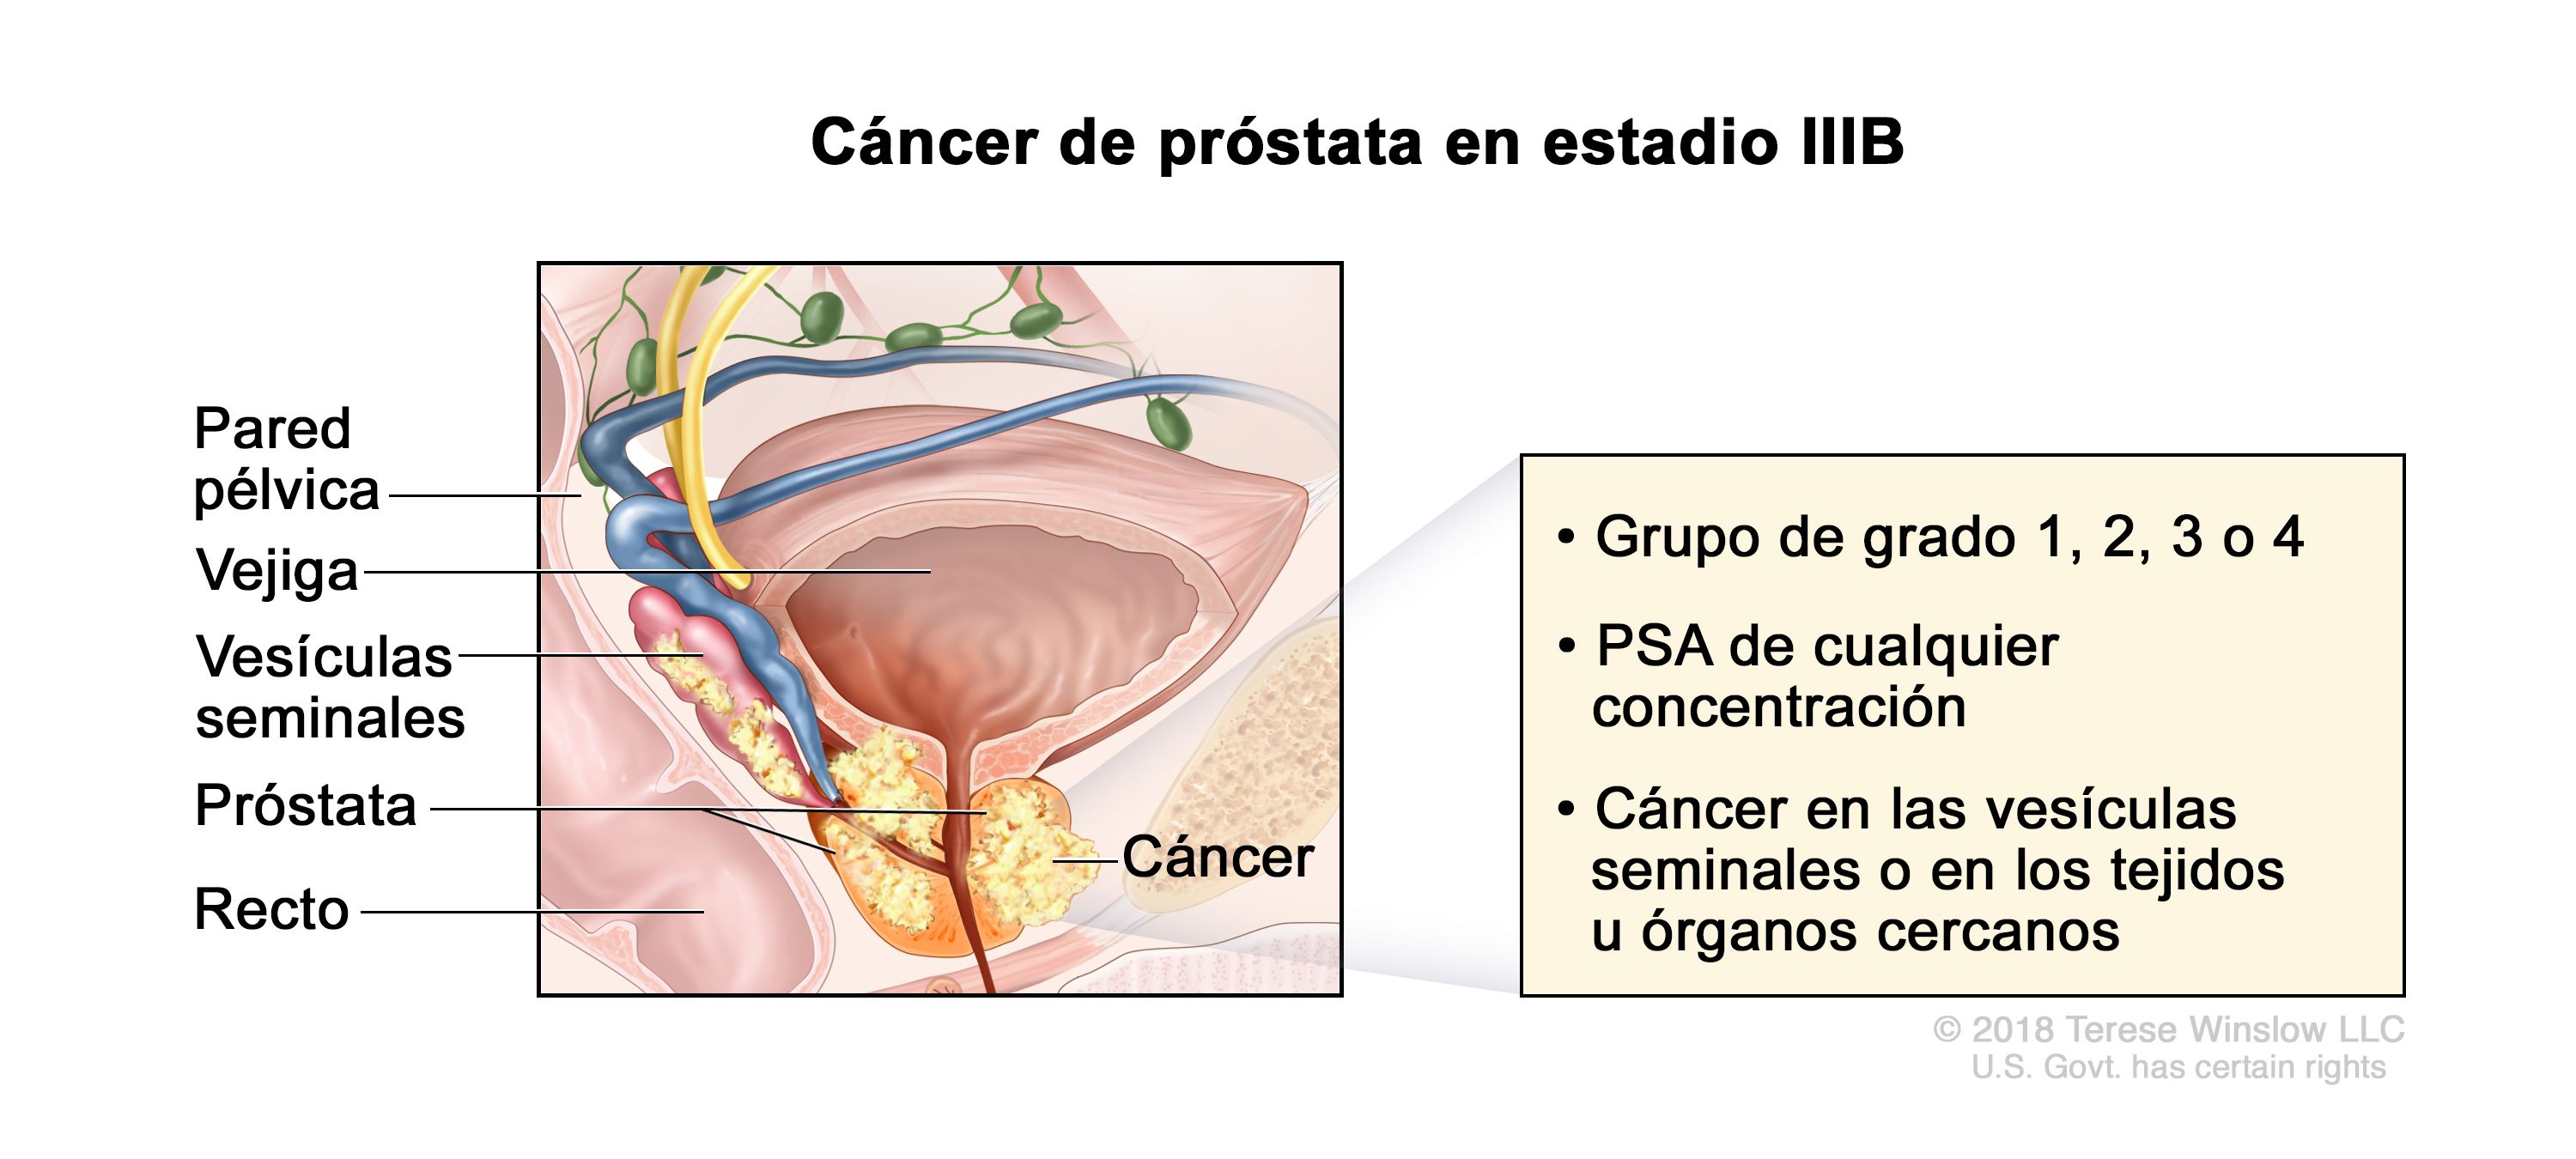 cancer de prostata etapa 4